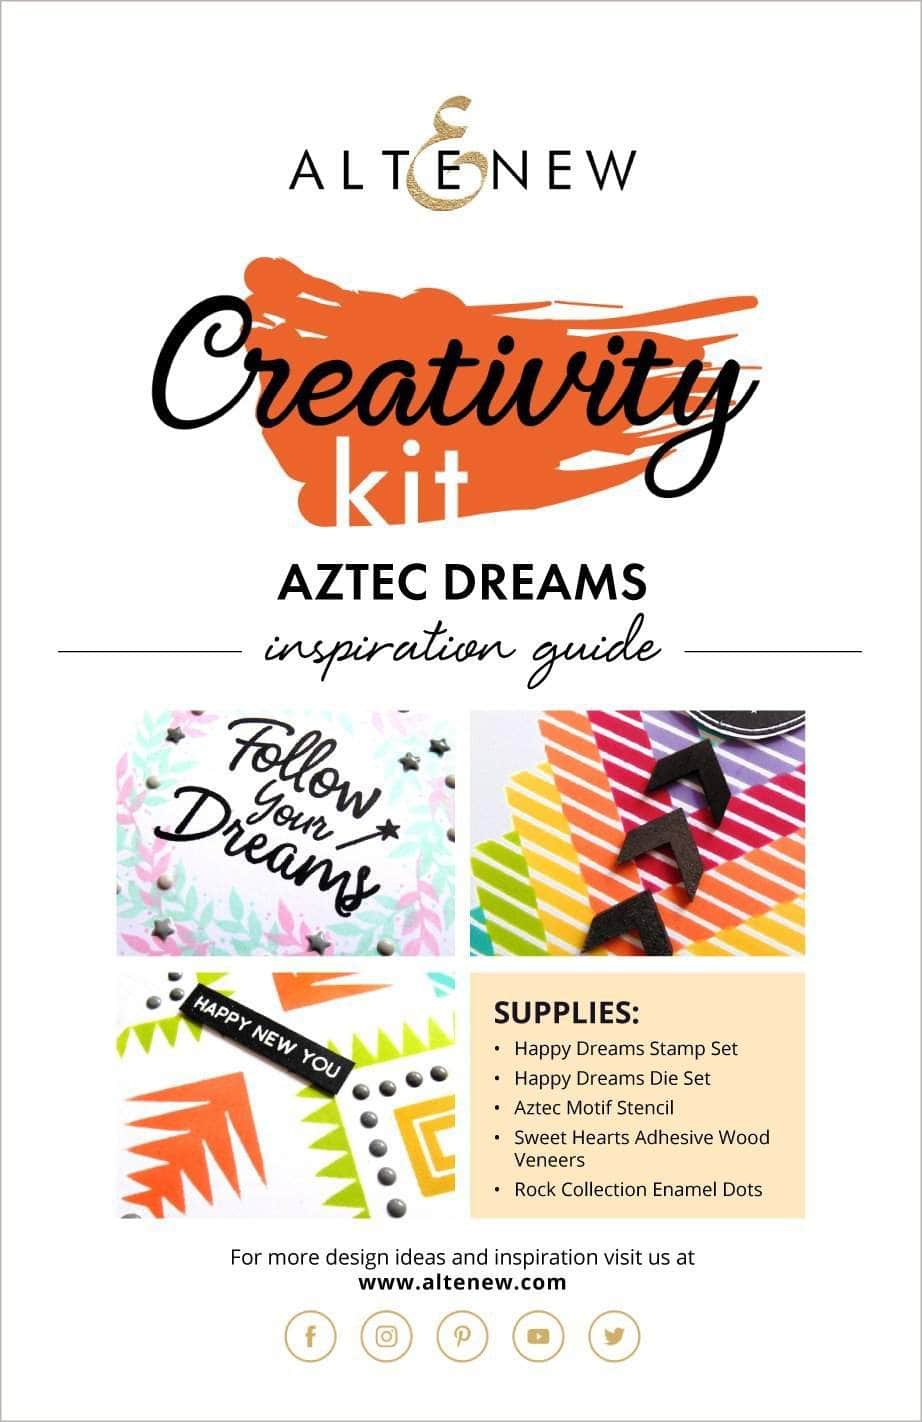 Printed Media Aztec Dreams Creativity Kit Inspiration Guide